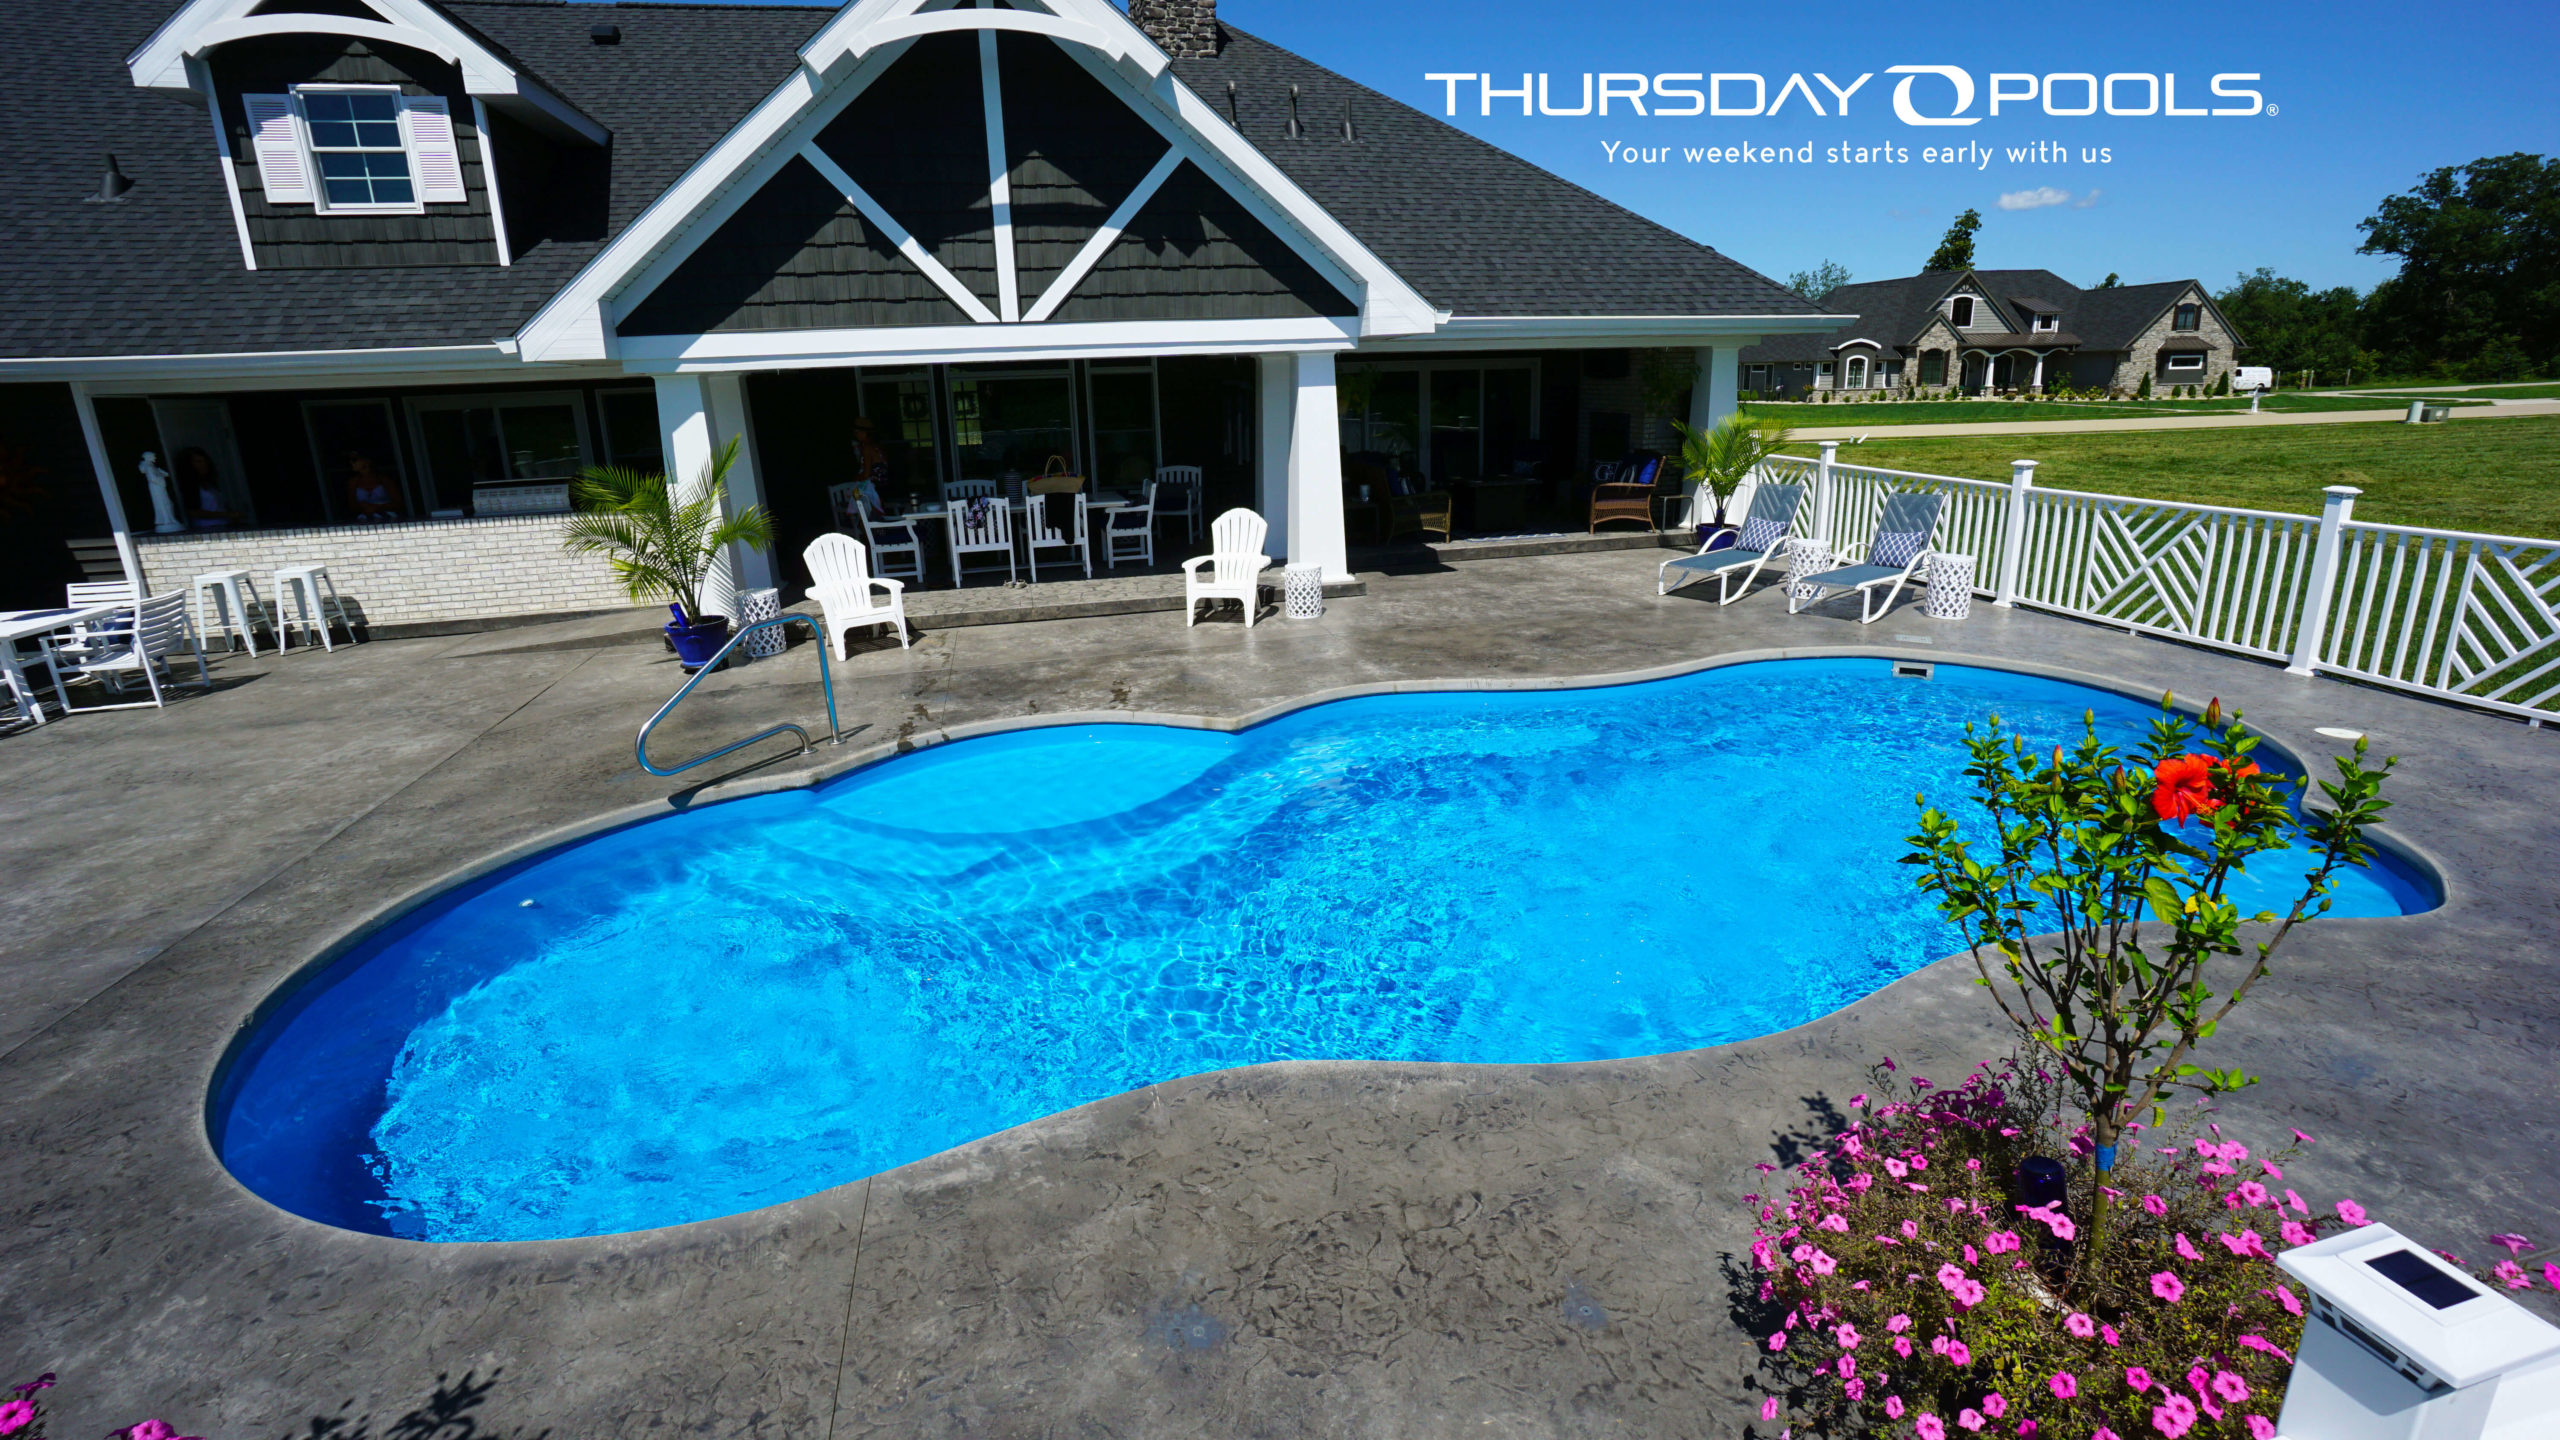 sun day blue hawaiian pools of michigan thursday pools